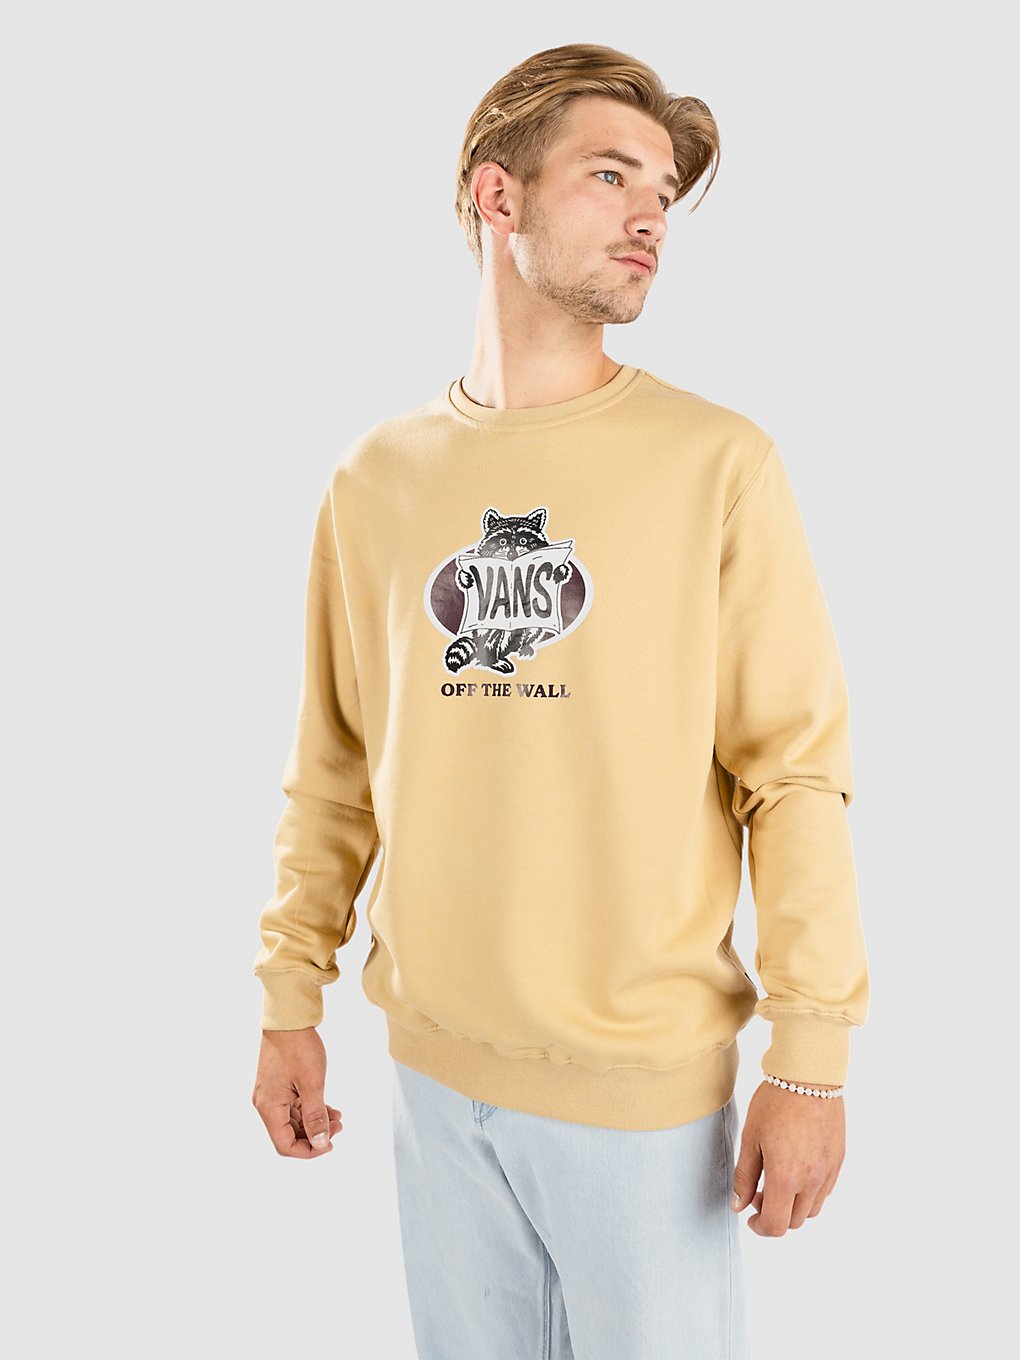 Vans Racks Crew Sweater taos taupe kaufen